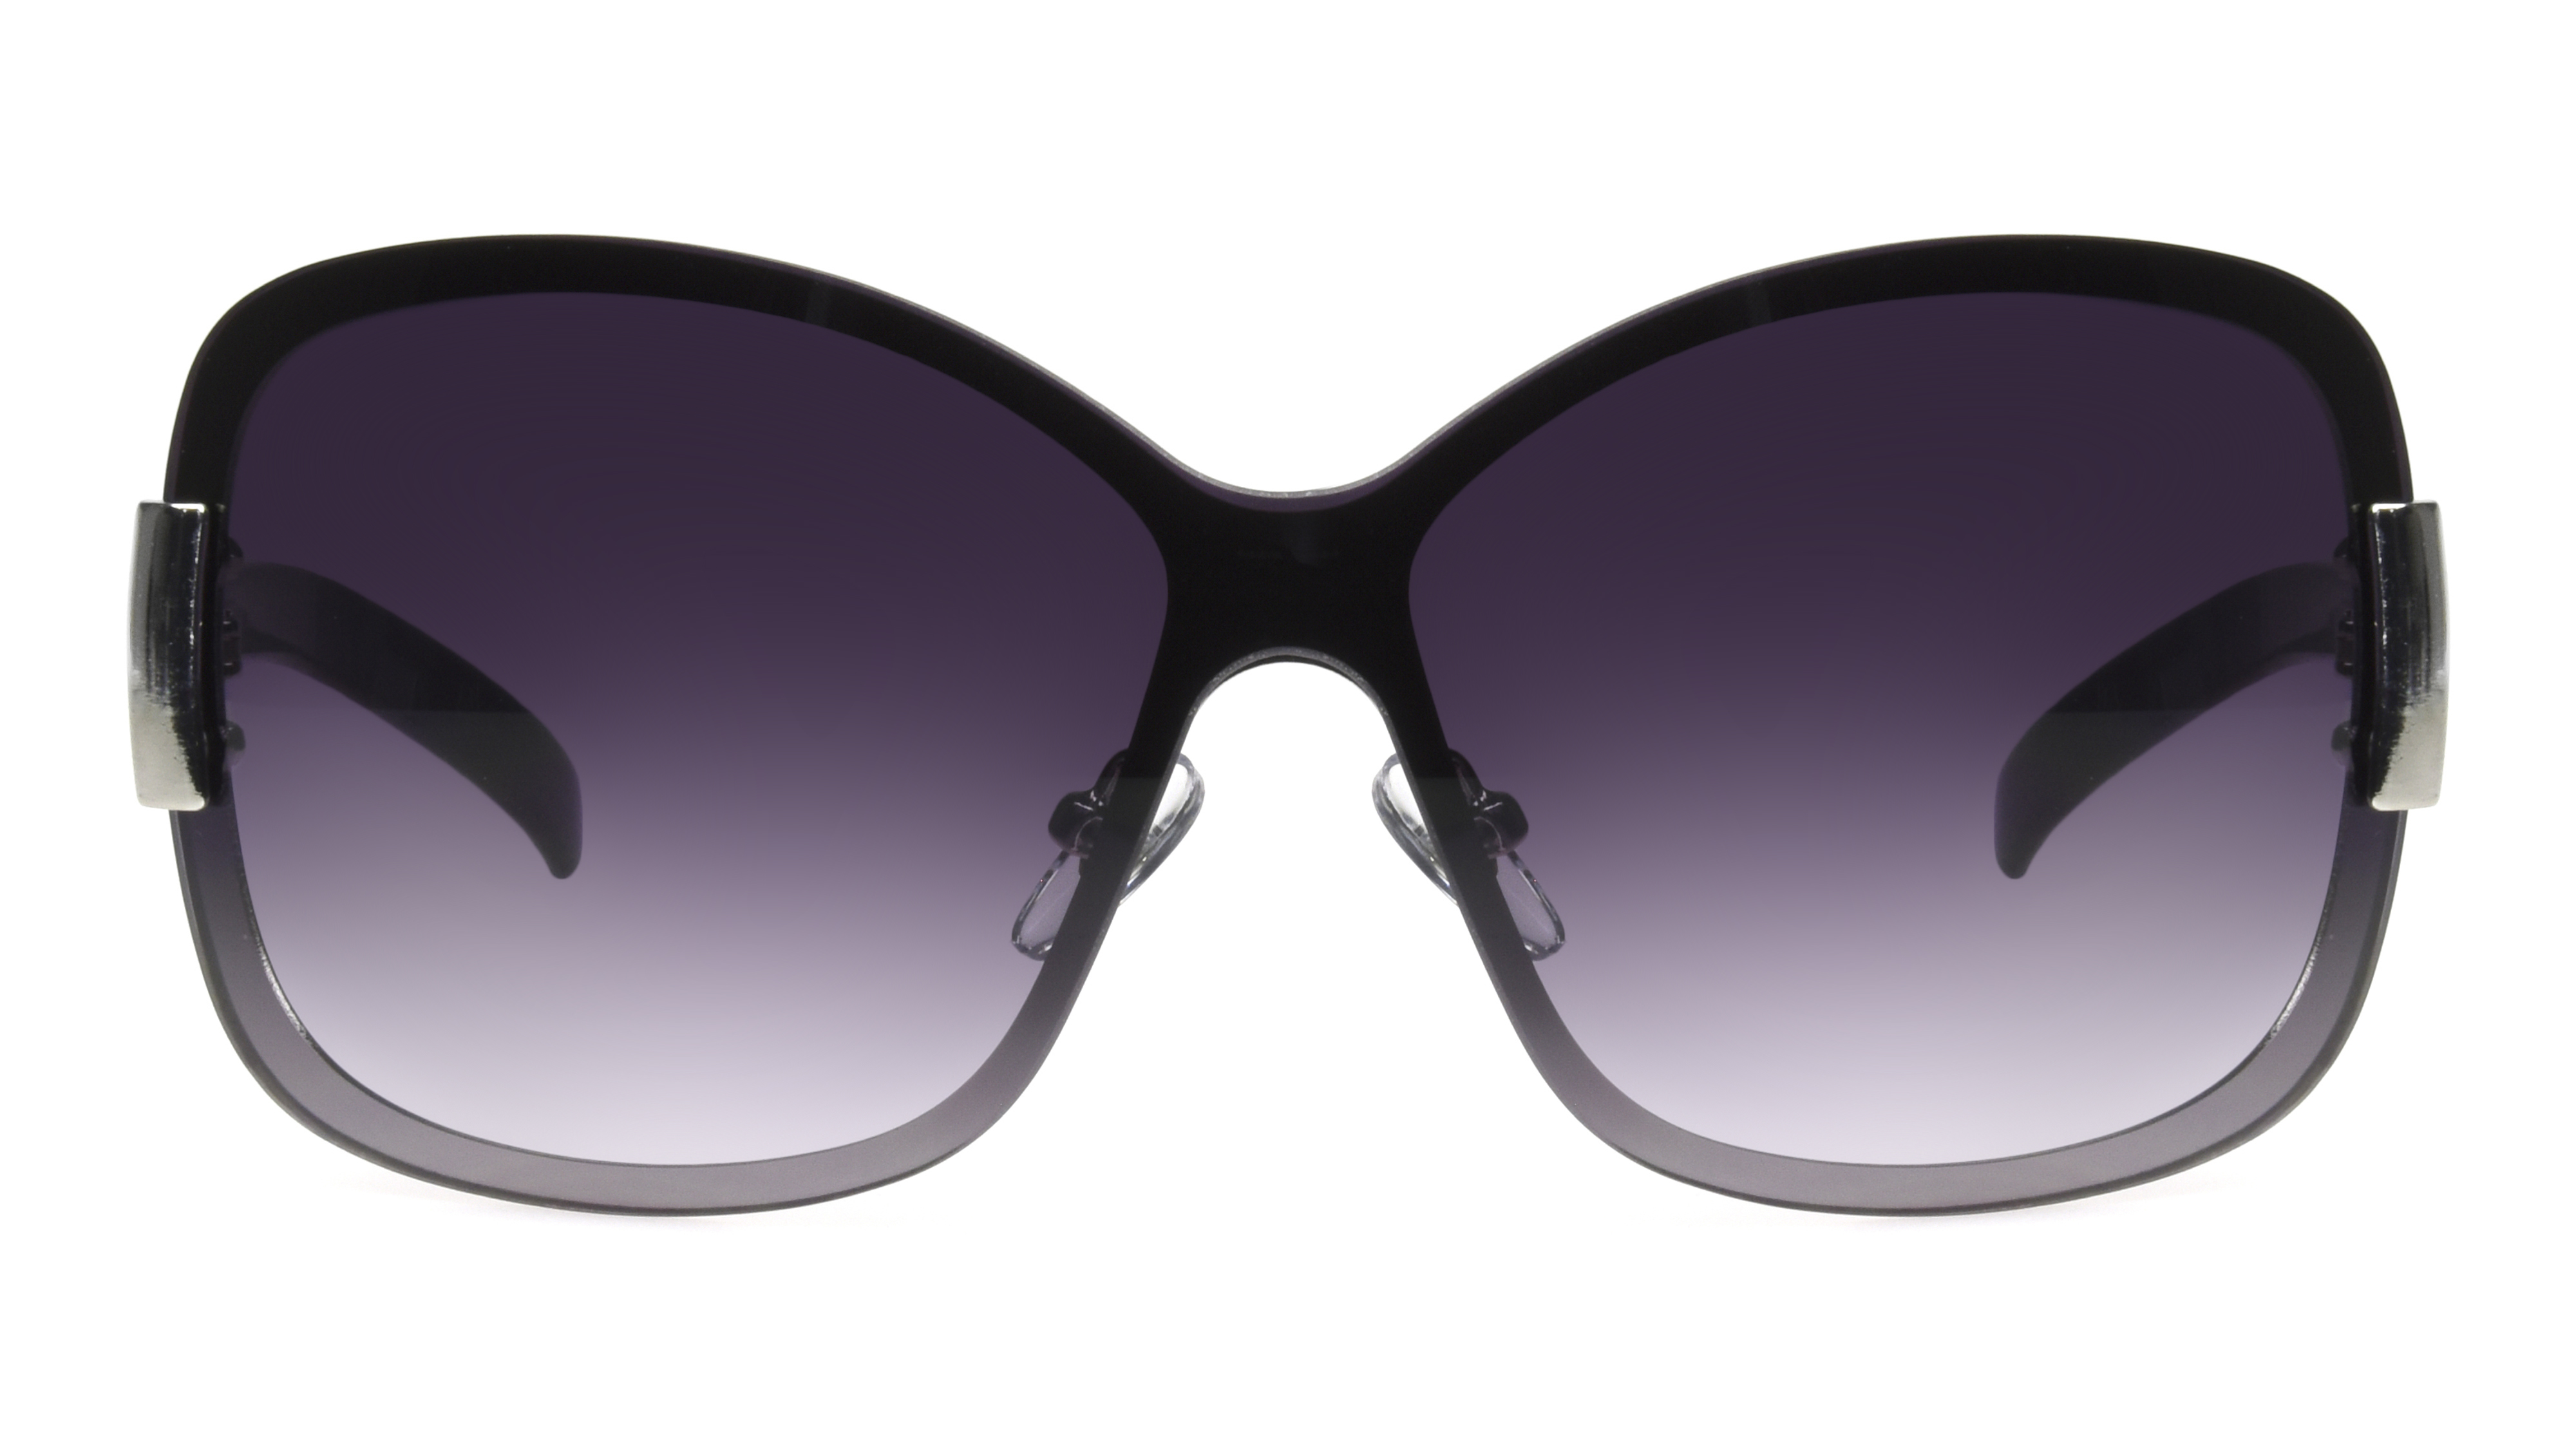 Steve Madden Women's Silver Square Sunglasses - image 1 of 3